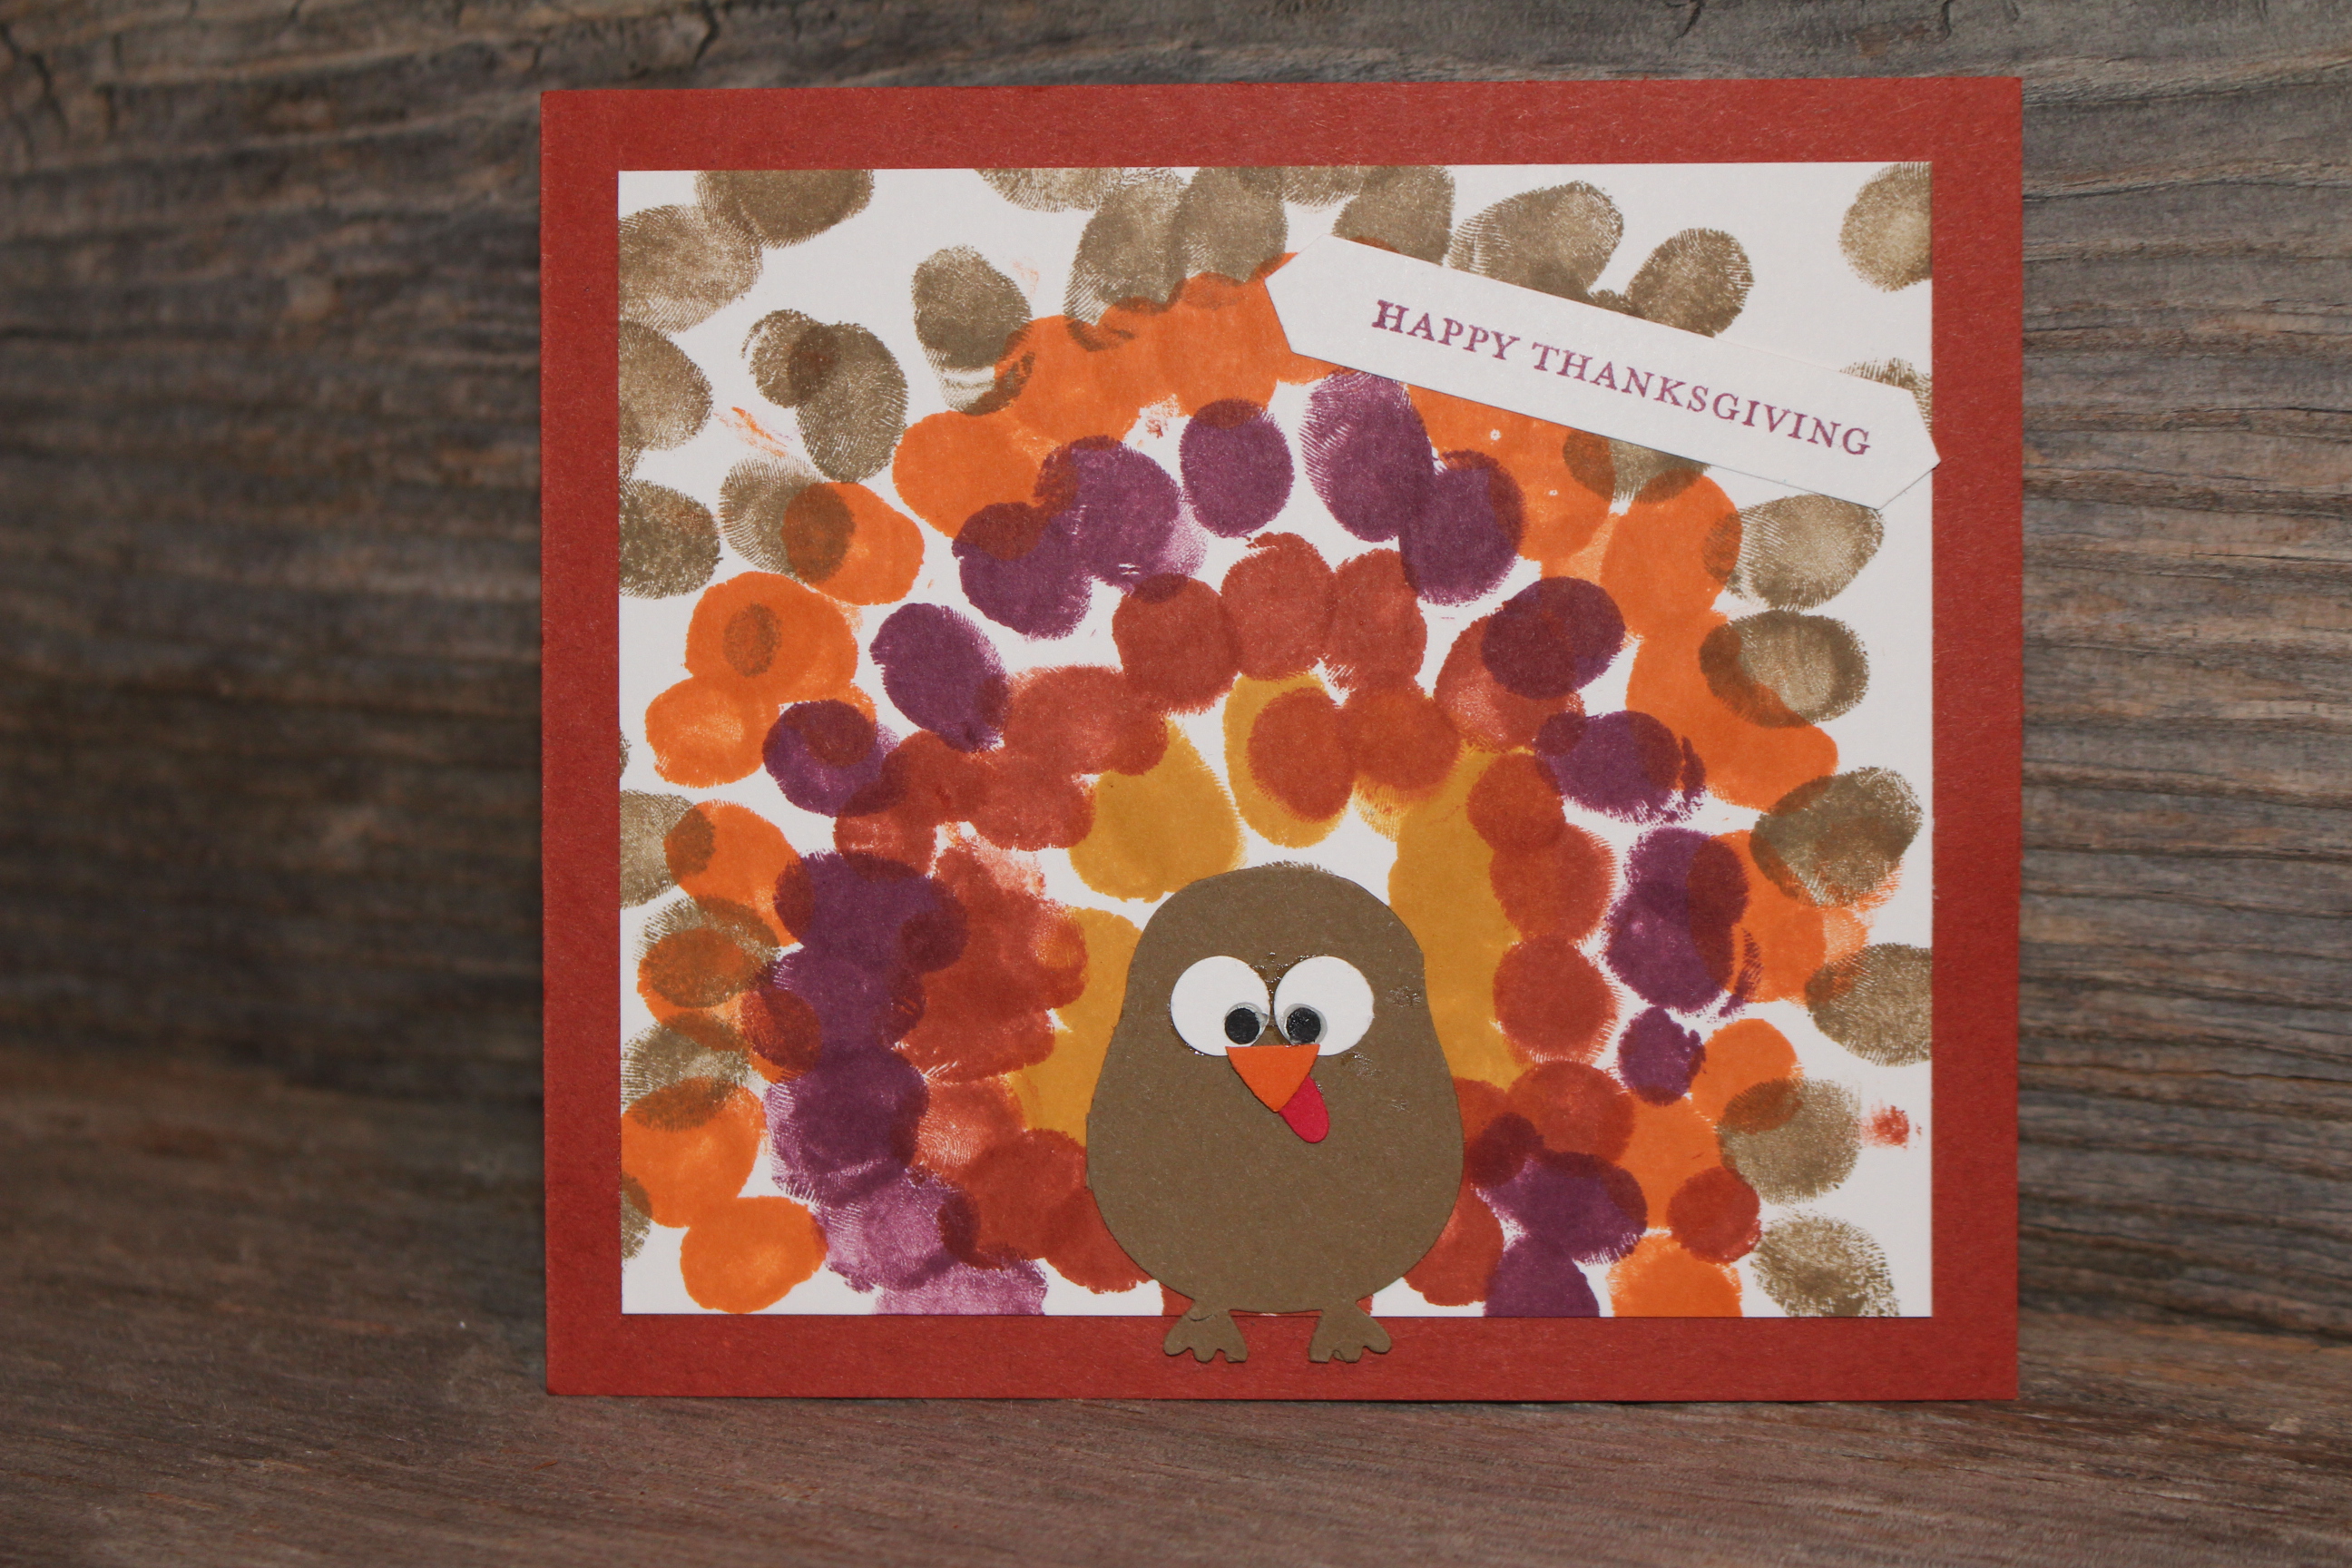 Happy Thanksgiving From Three Turkeys!